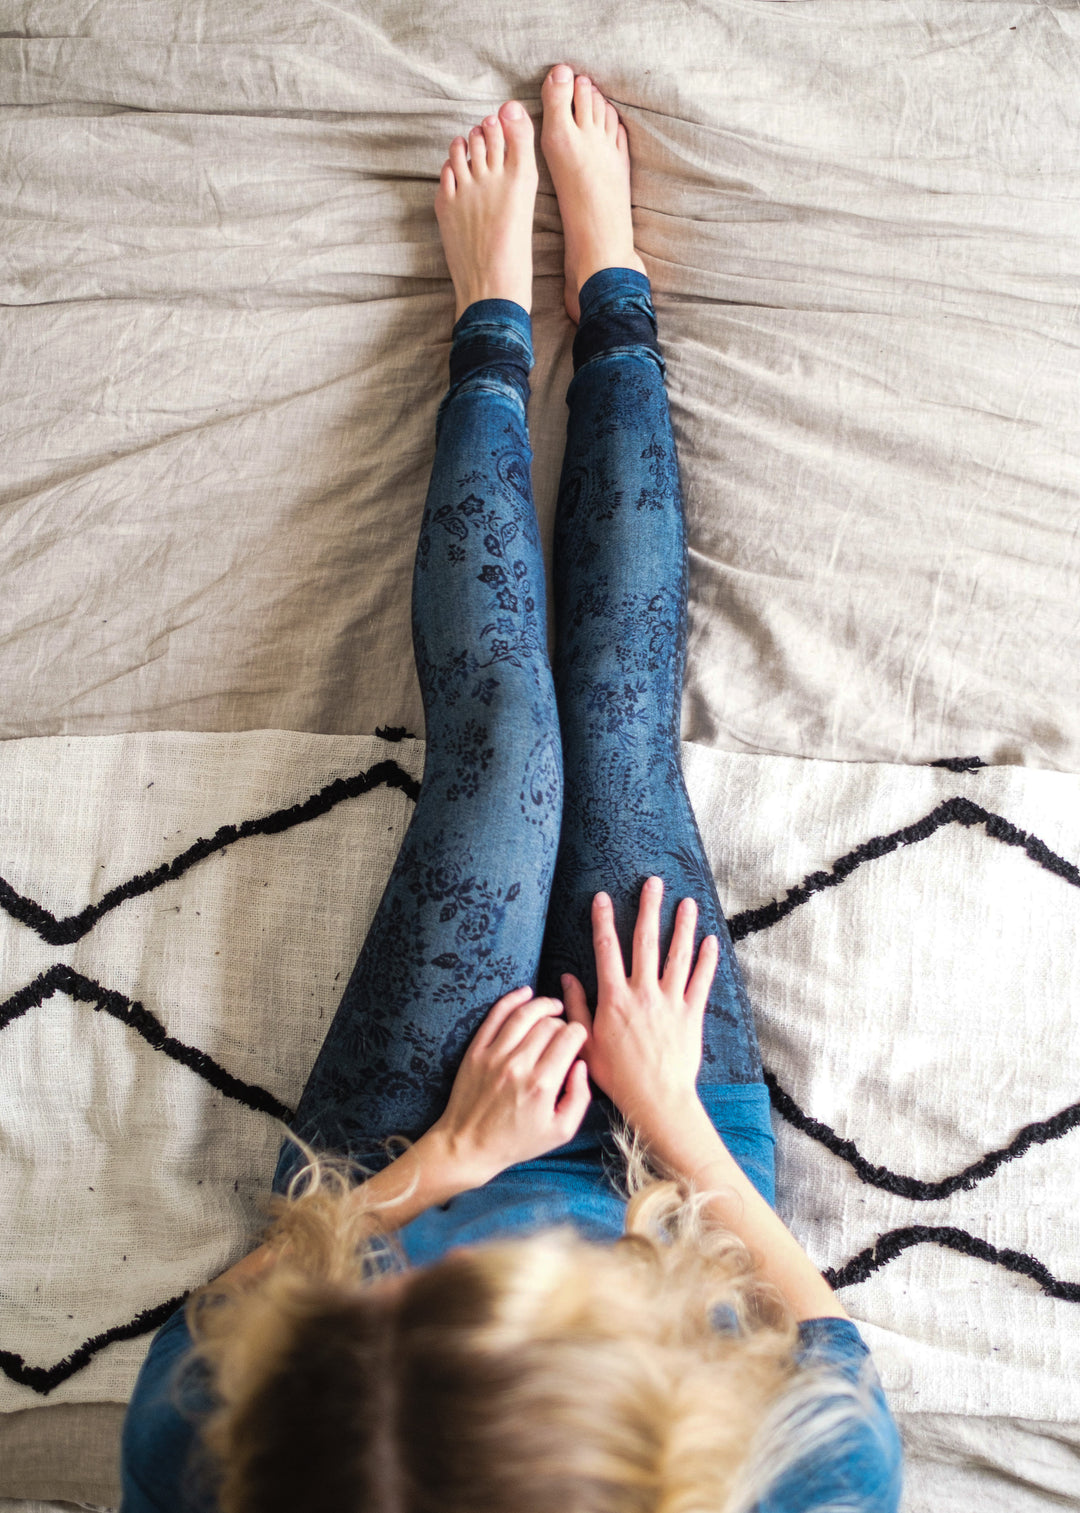 High, rise denim printed leggings for yoga and loungwear